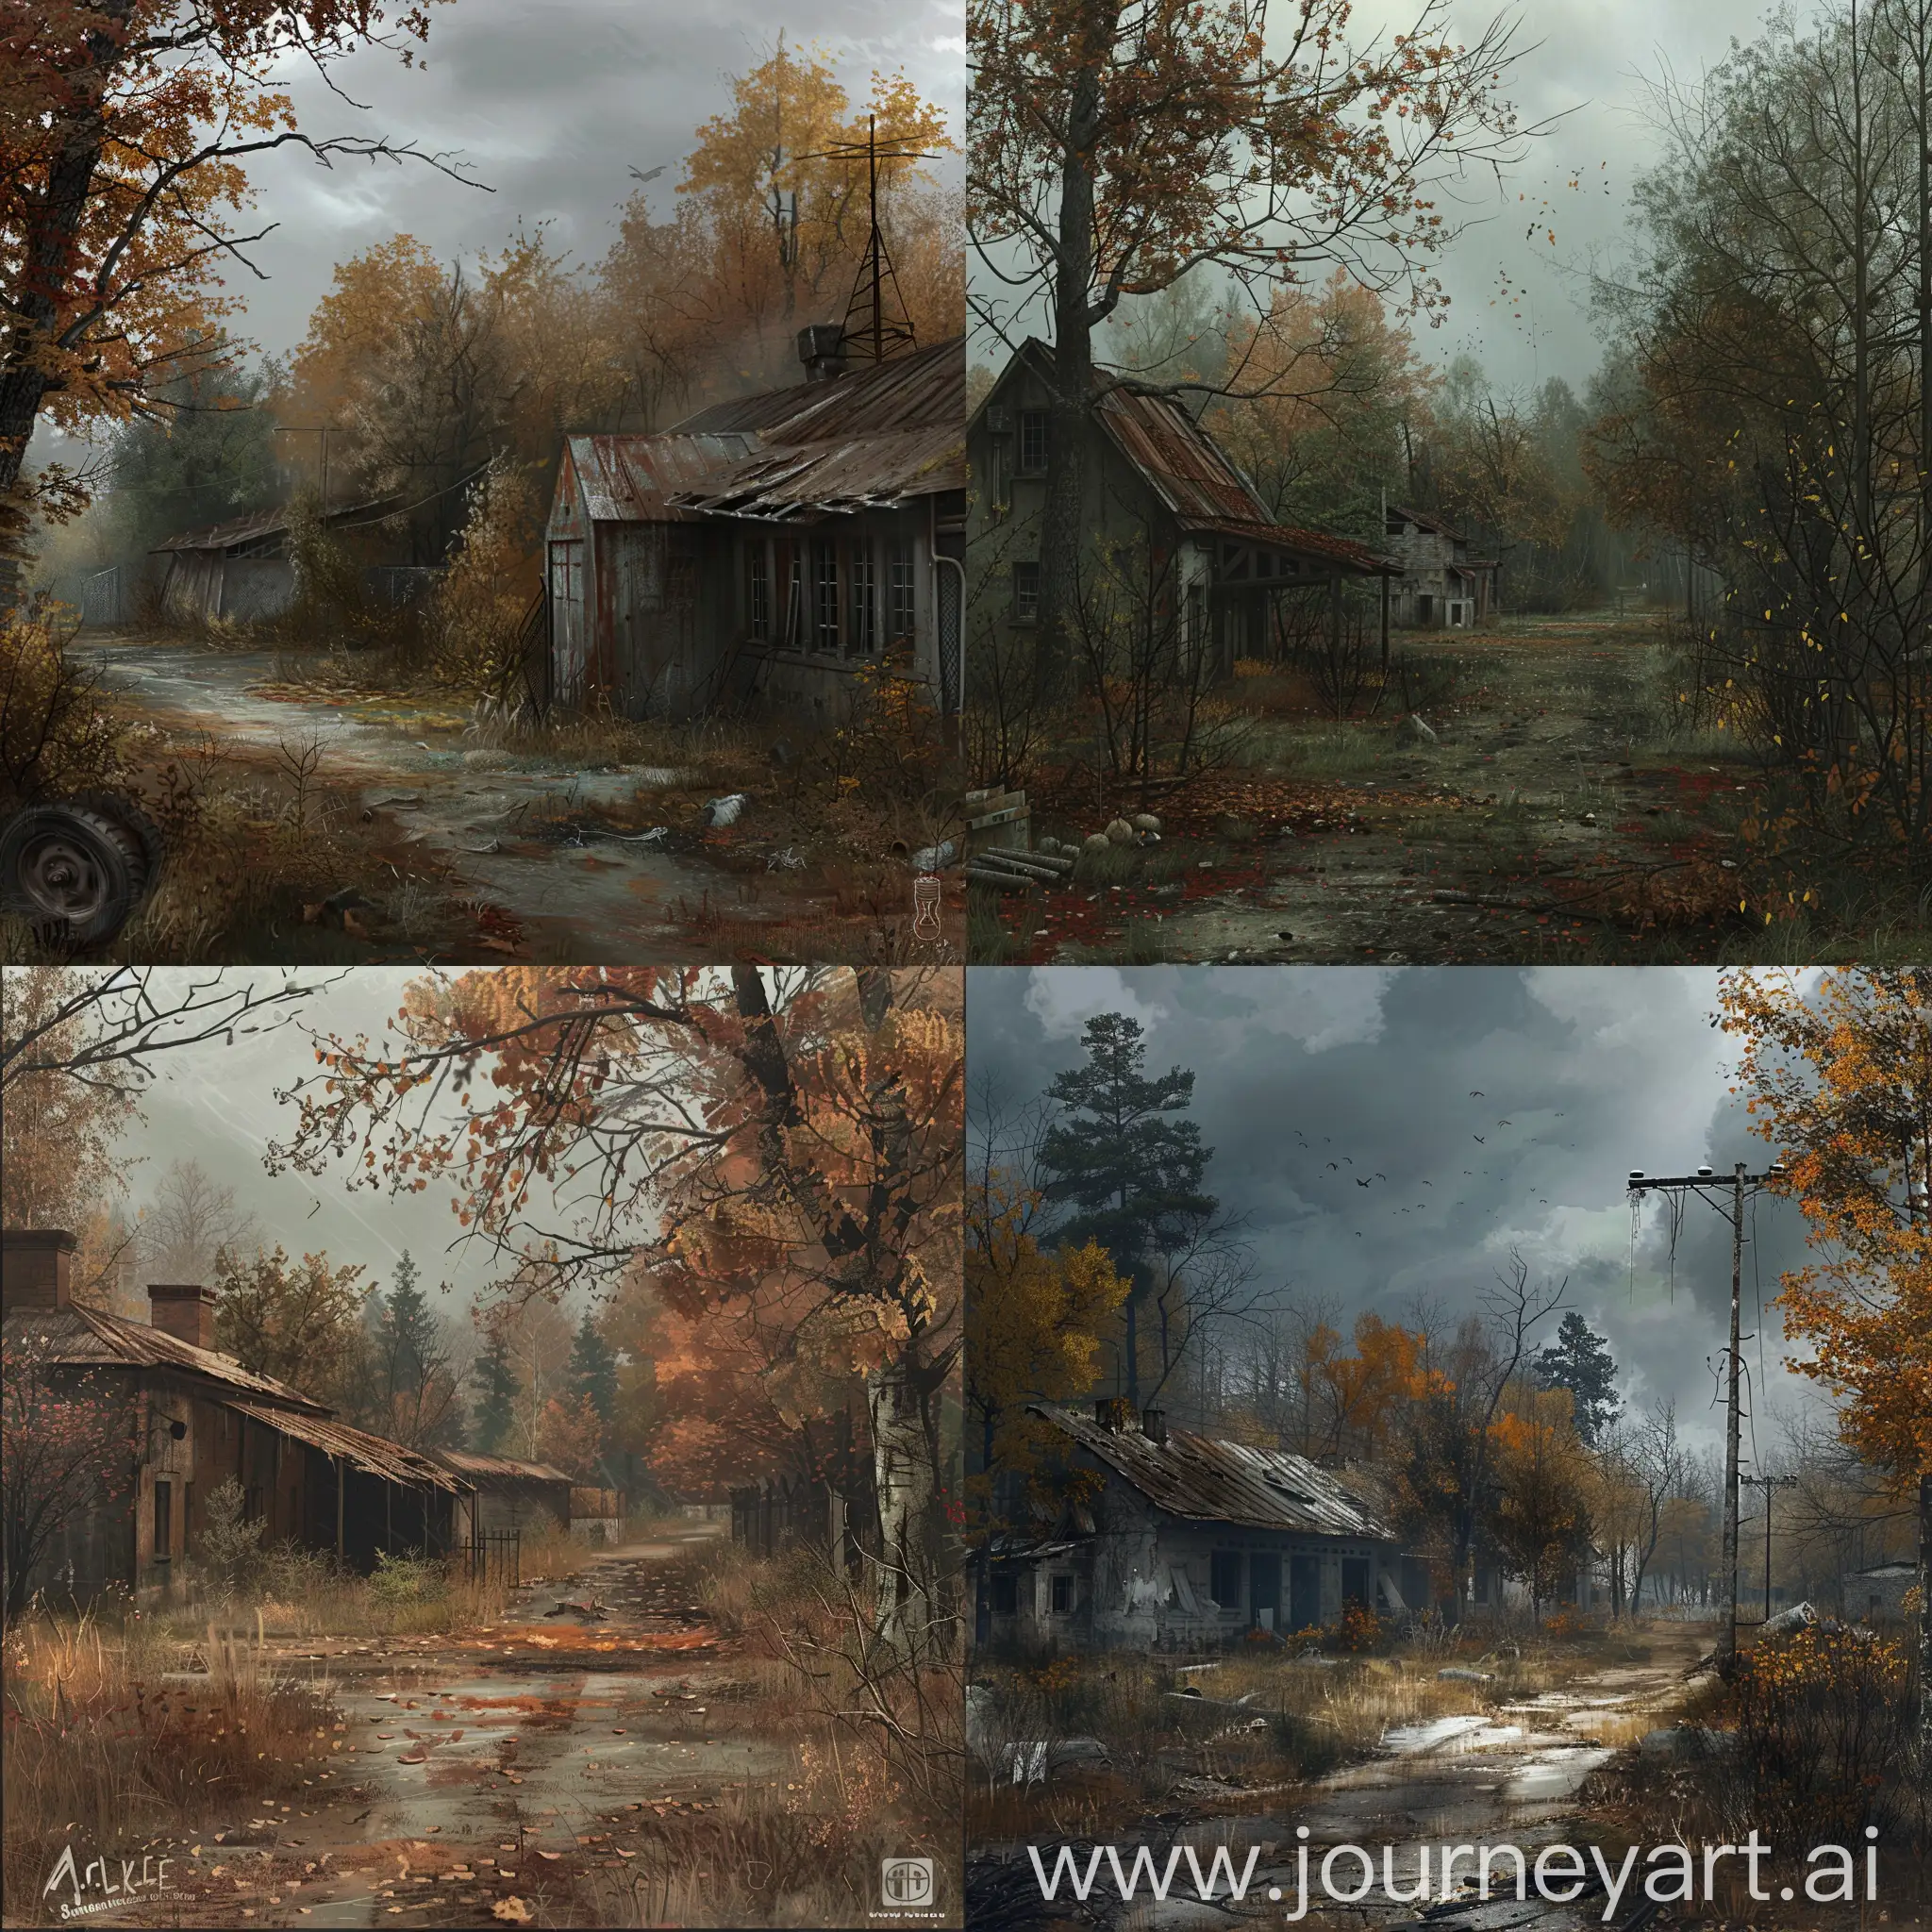 Gloomy-Autumn-Setting-in-STALKER-Universe-Abandoned-Farmstead-Exploration